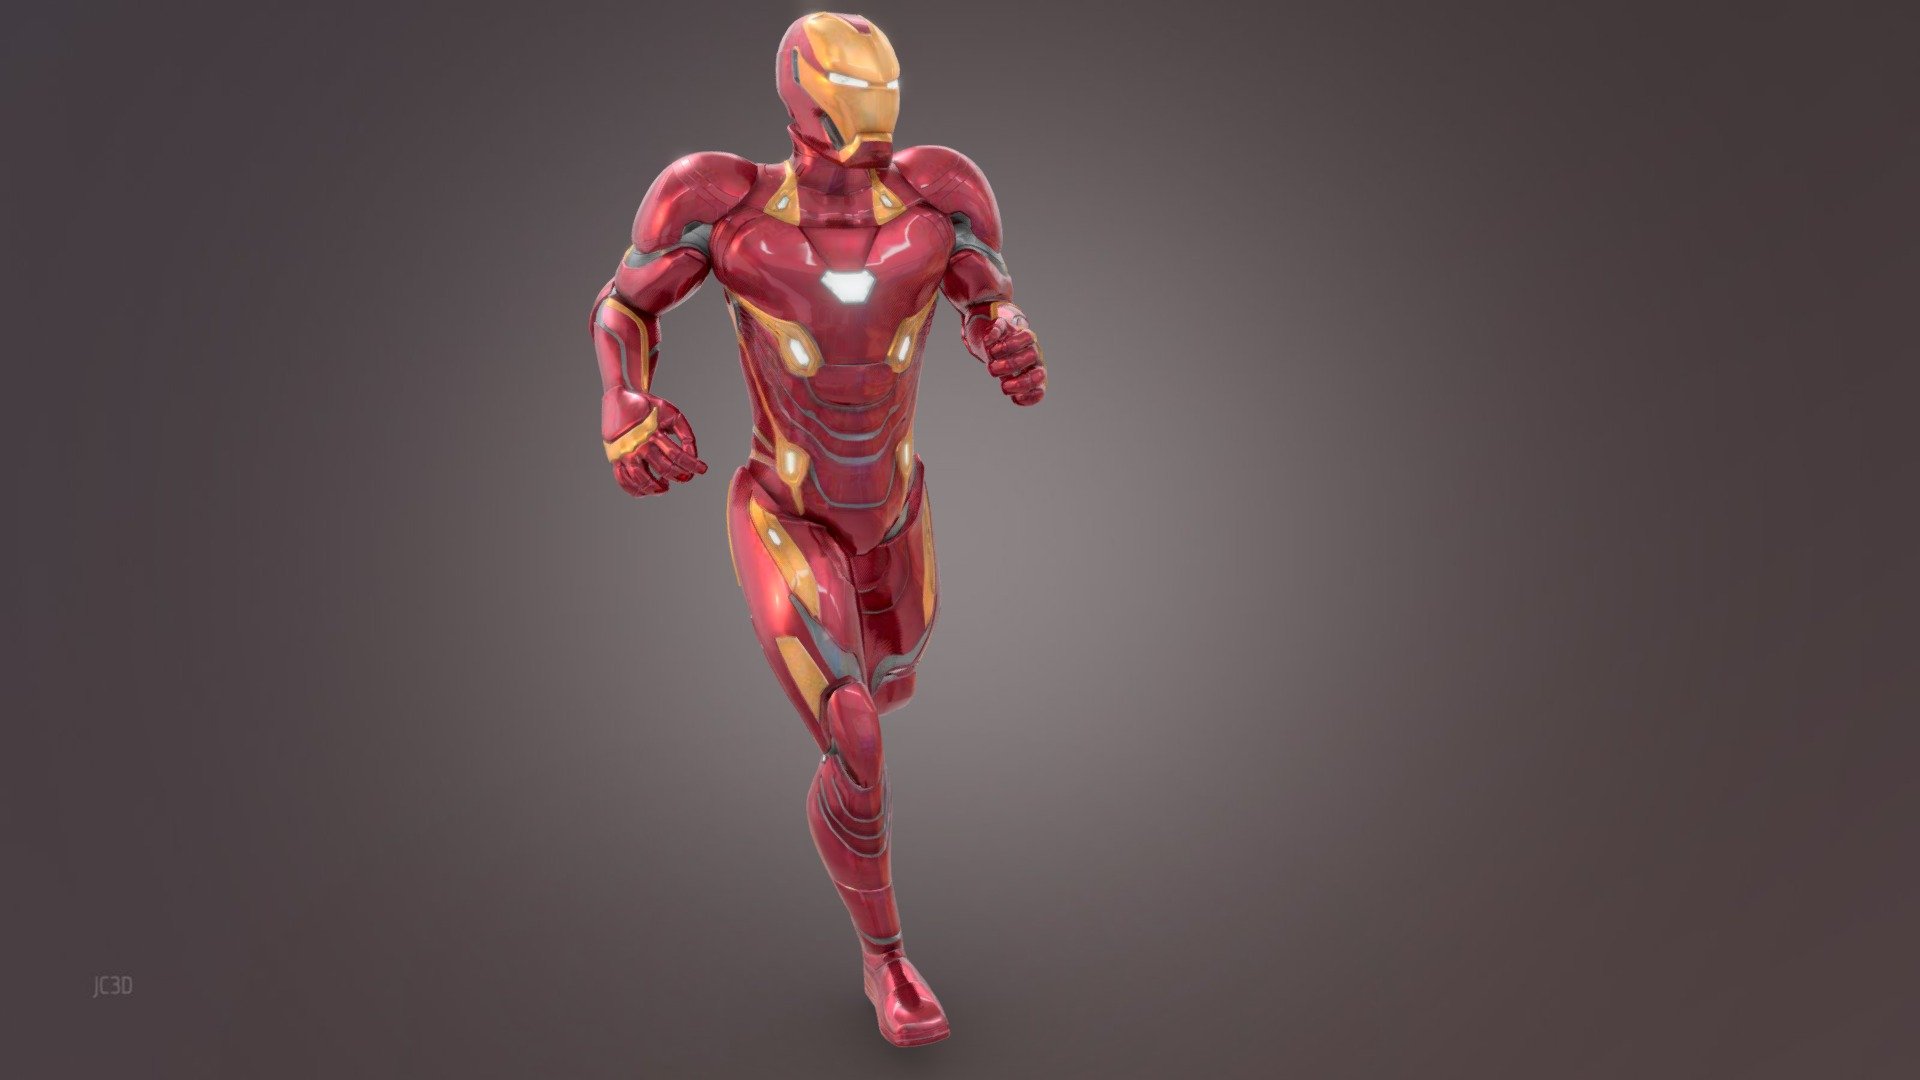 Avengers: Endgame - Why Didn't Tony Stark Build A Thanosbuster Armor?